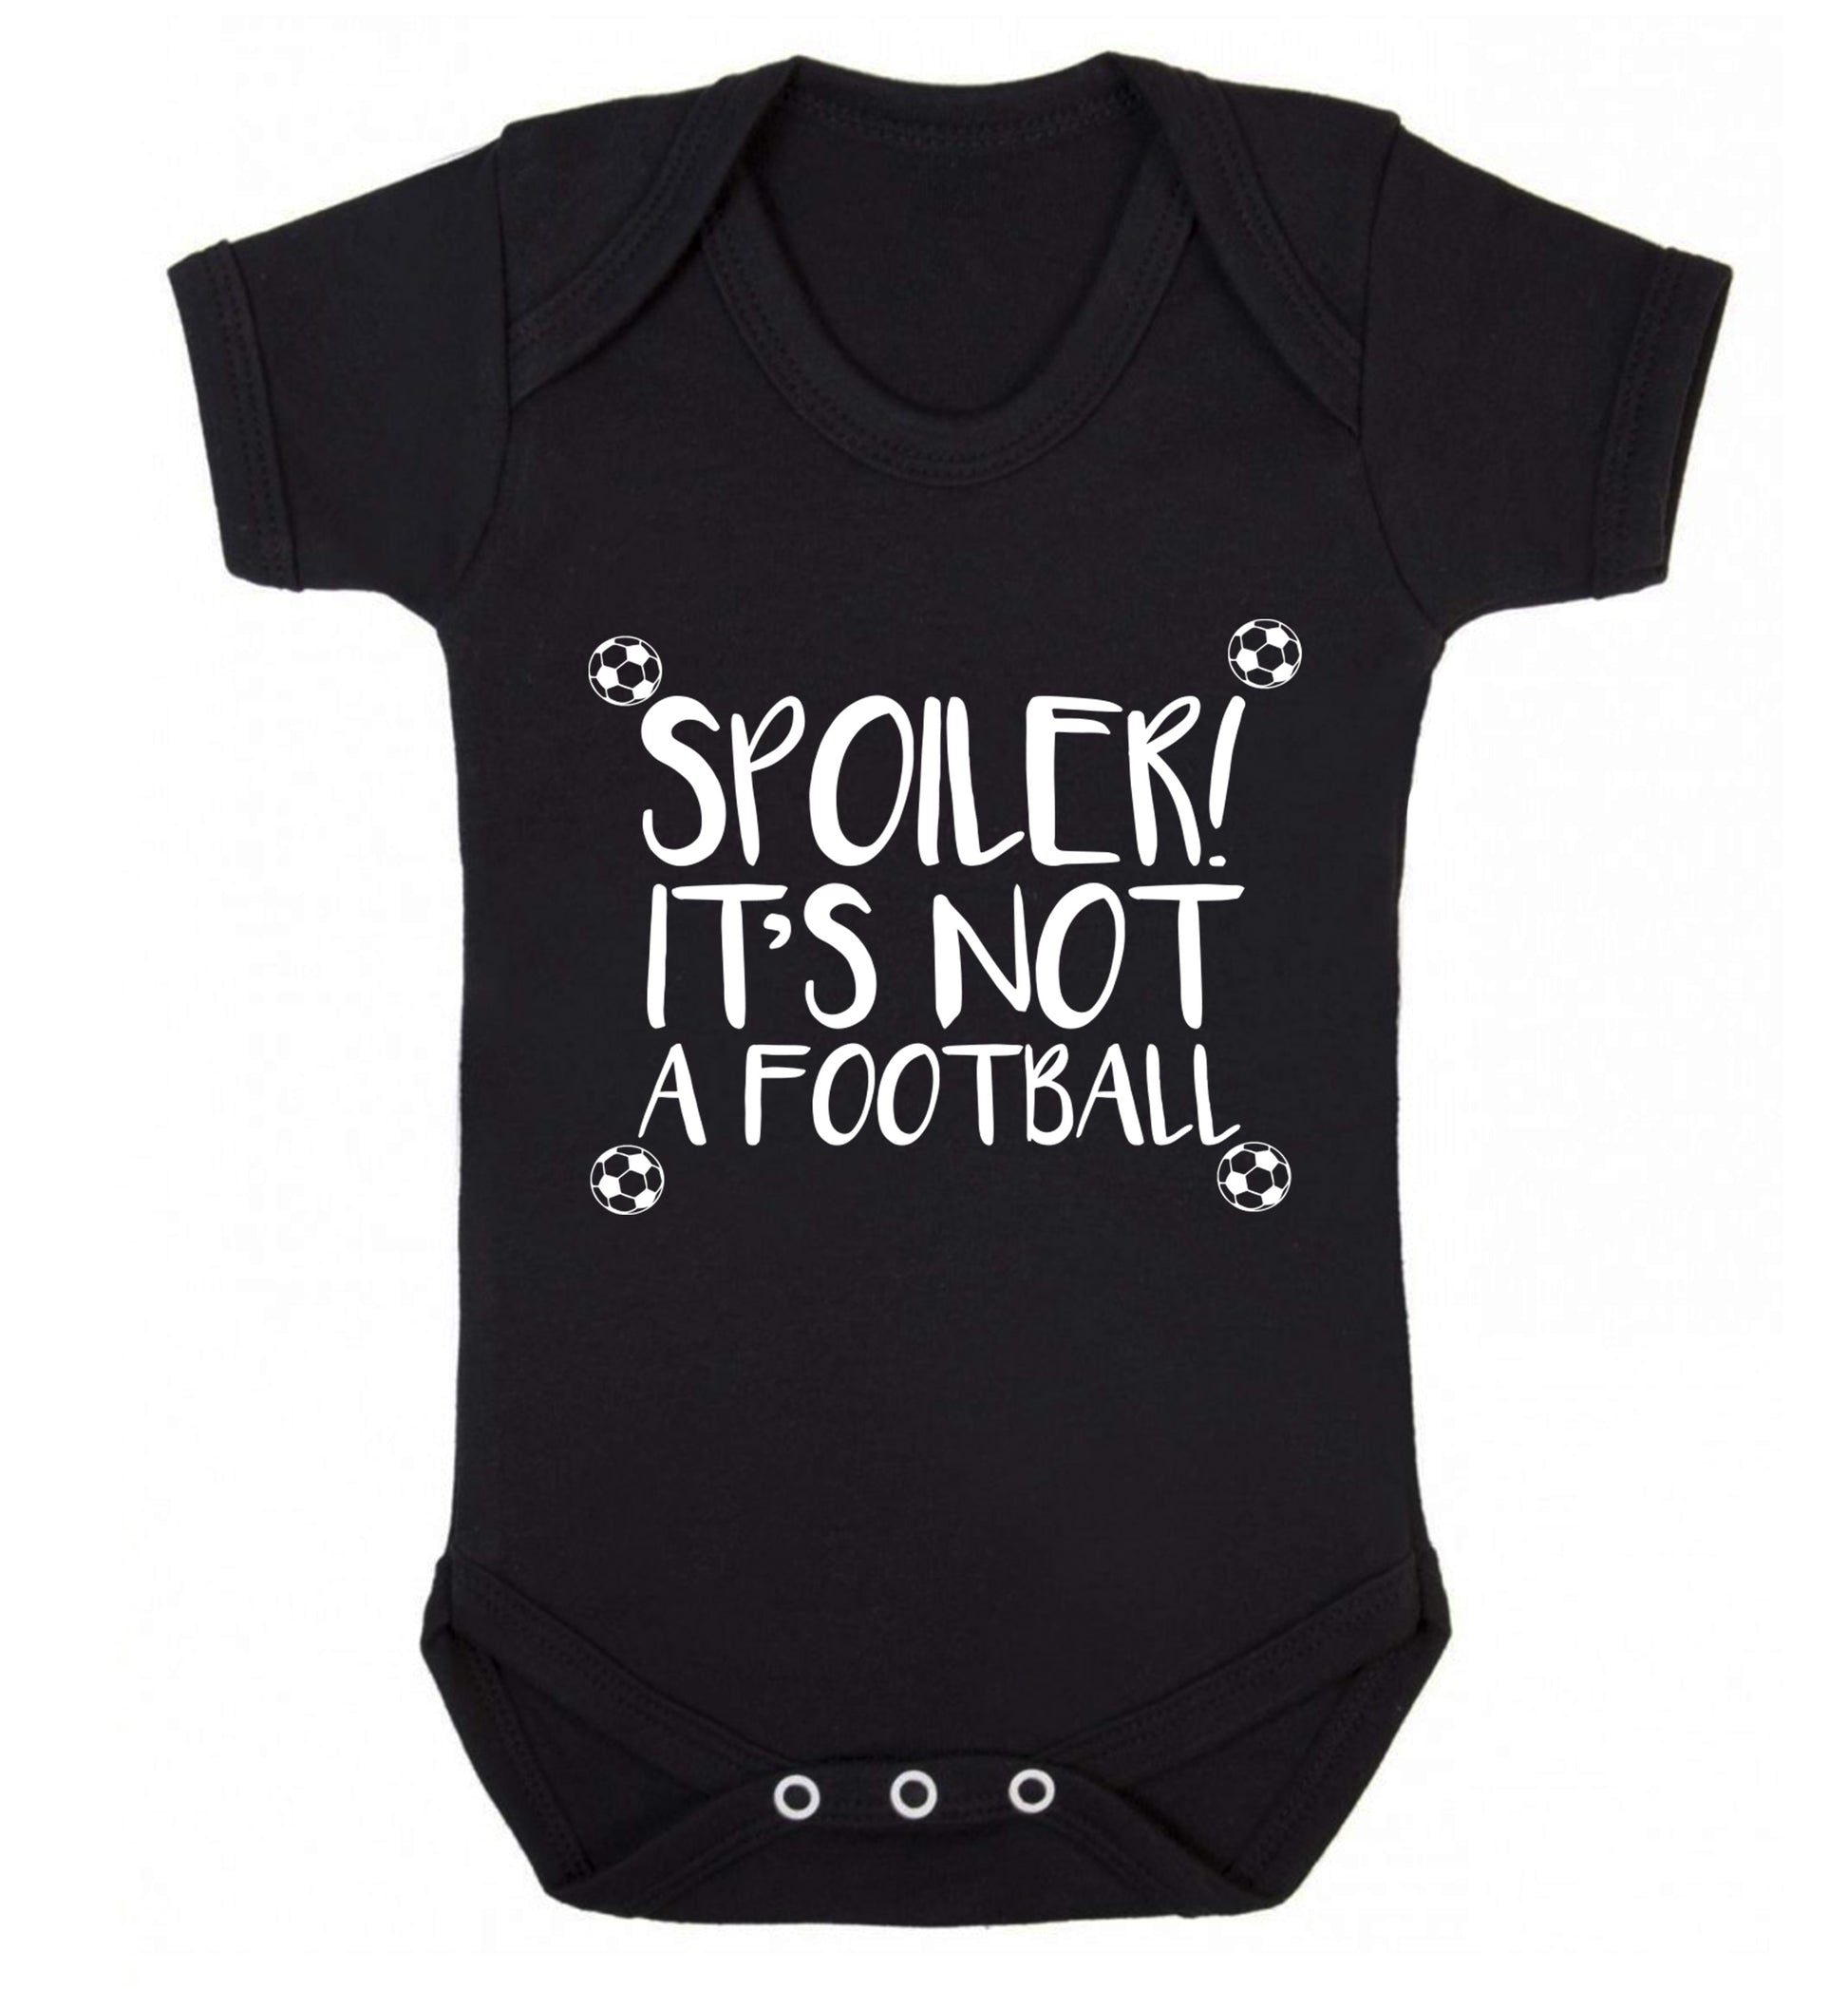 Spoiler it's not a football Baby Vest black 18-24 months